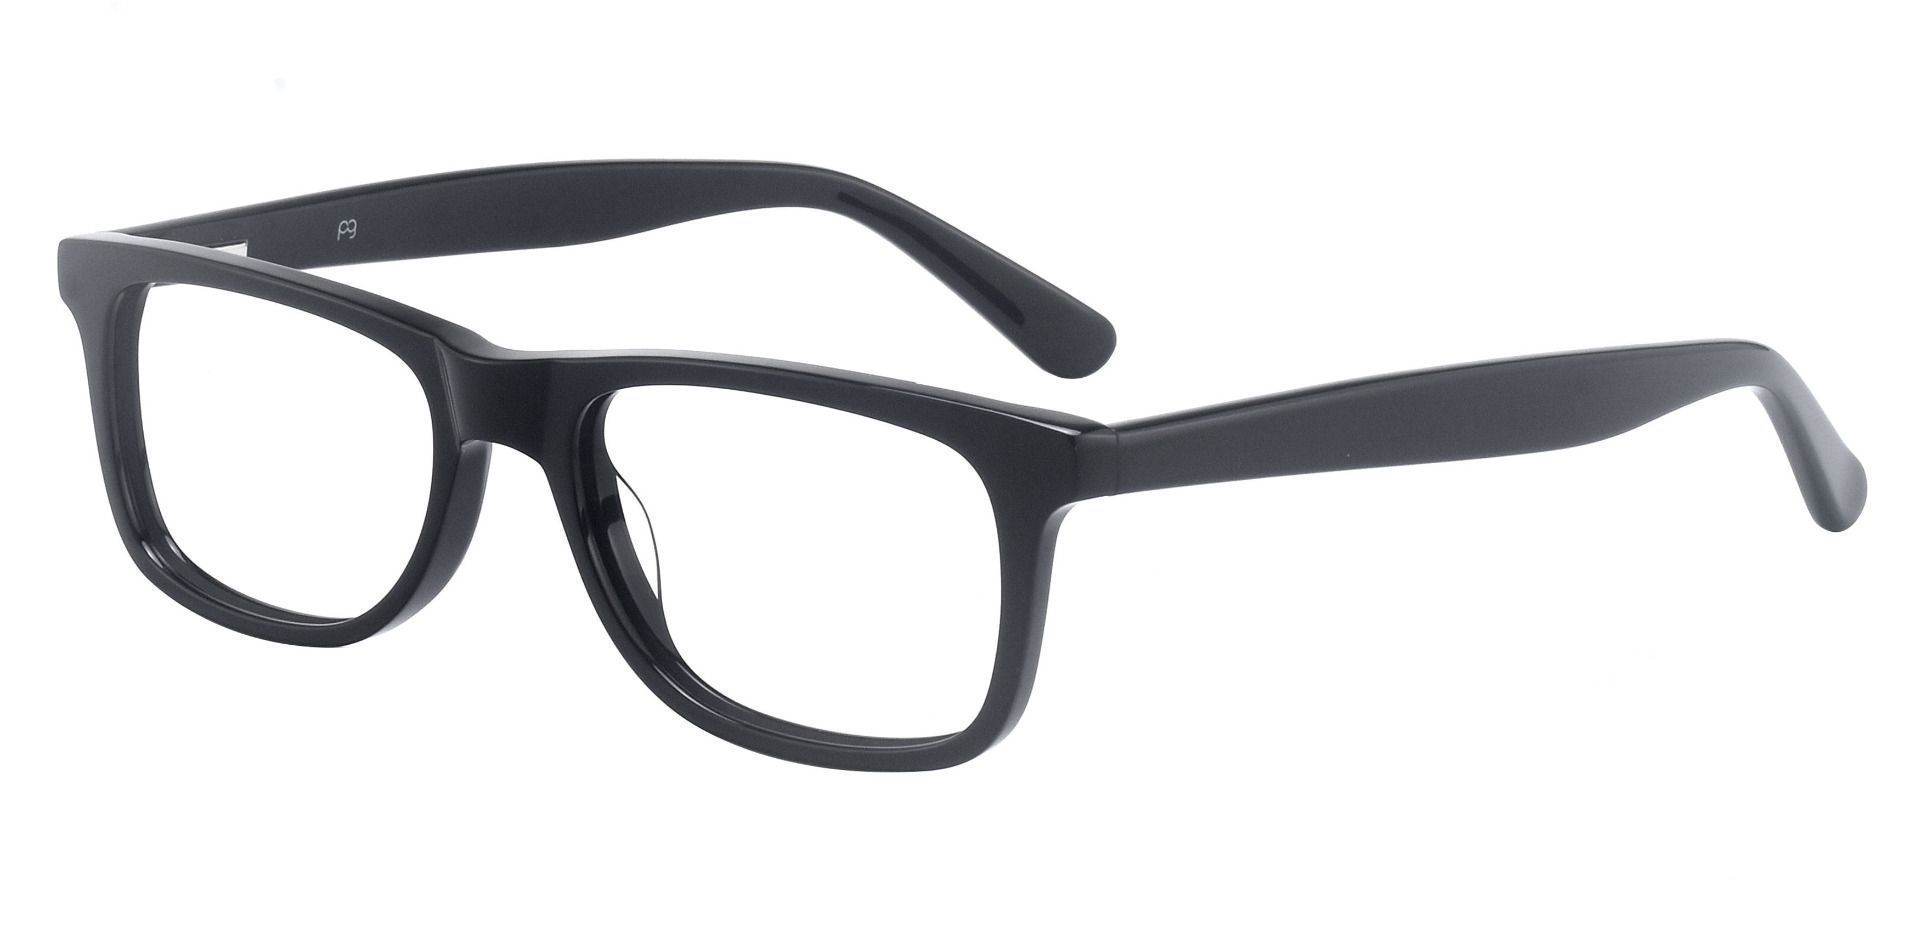 Denali Rectangle Prescription Glasses - Black